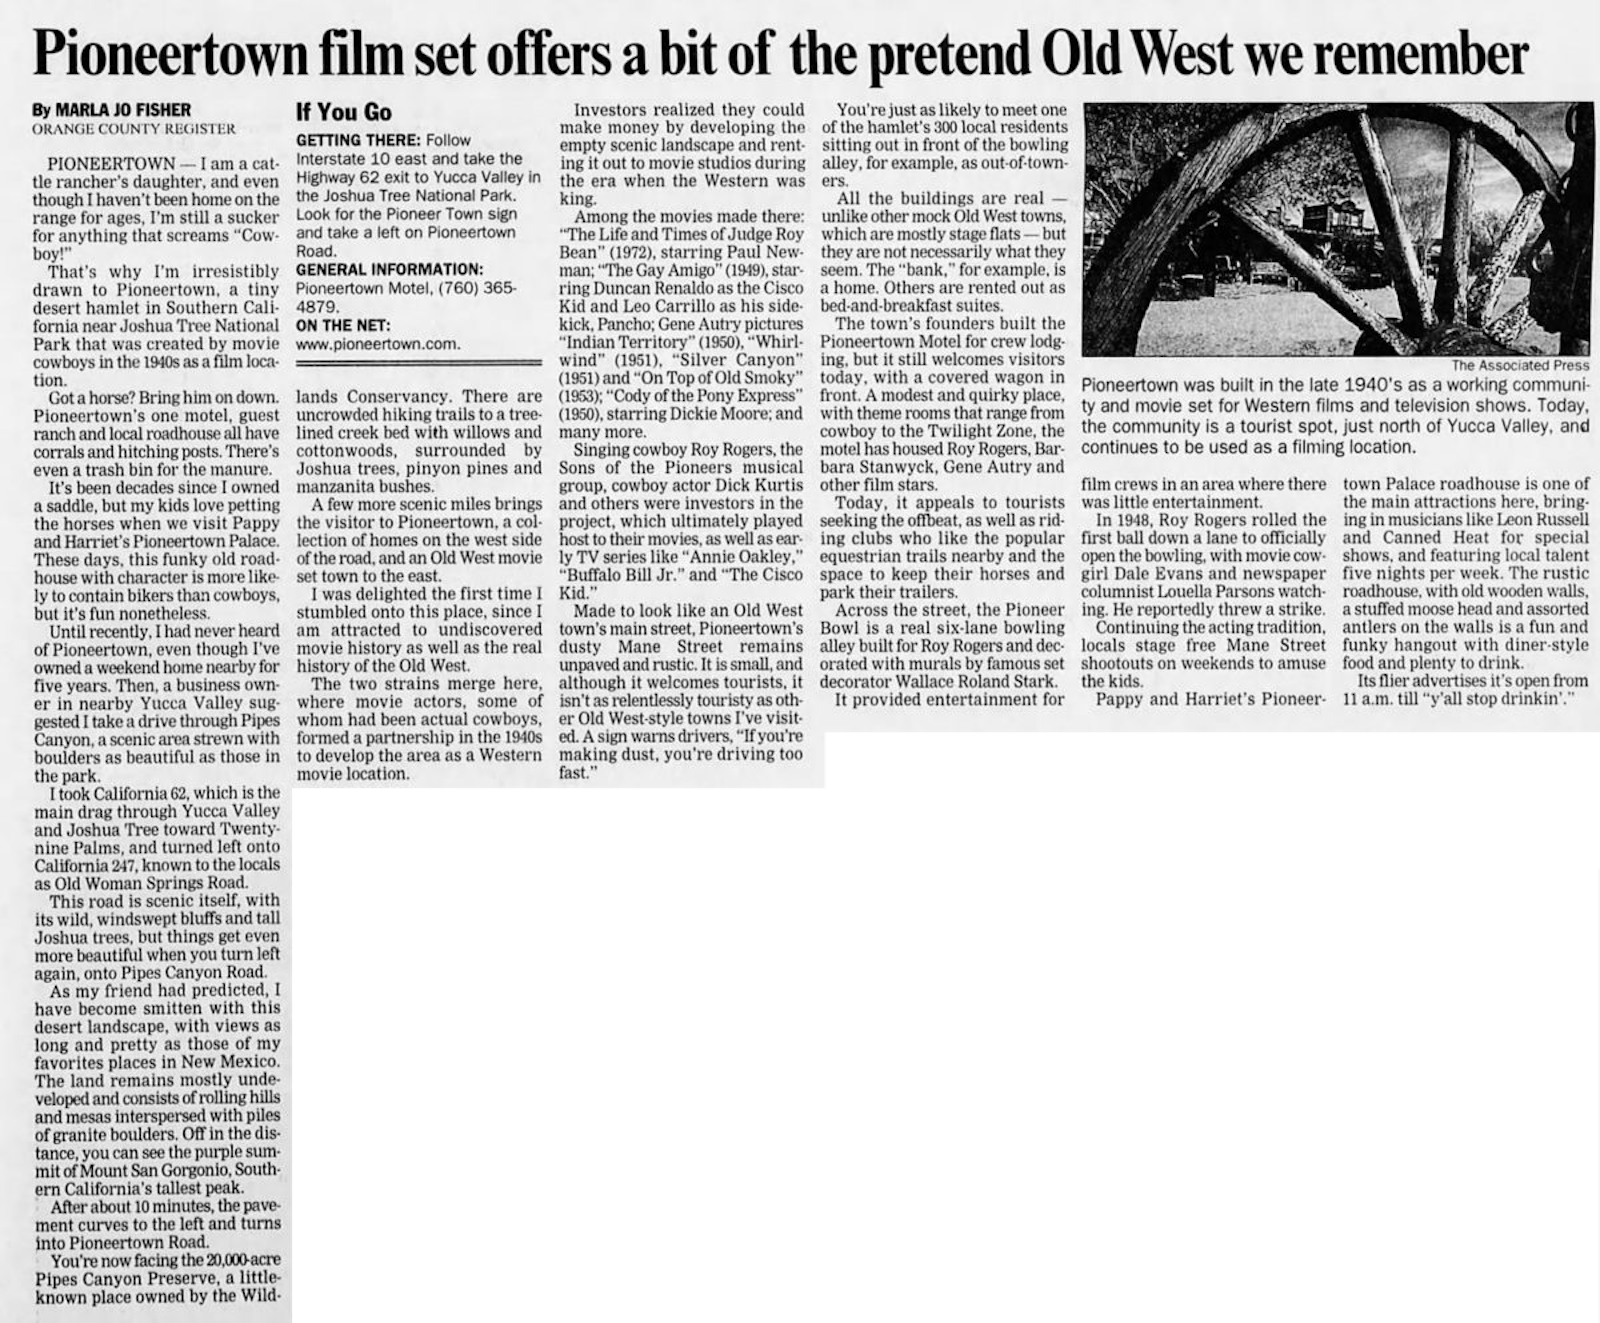 PIoneertown film set - Mar. 13, 2005 - Santa Cruz Sentinel article clipping